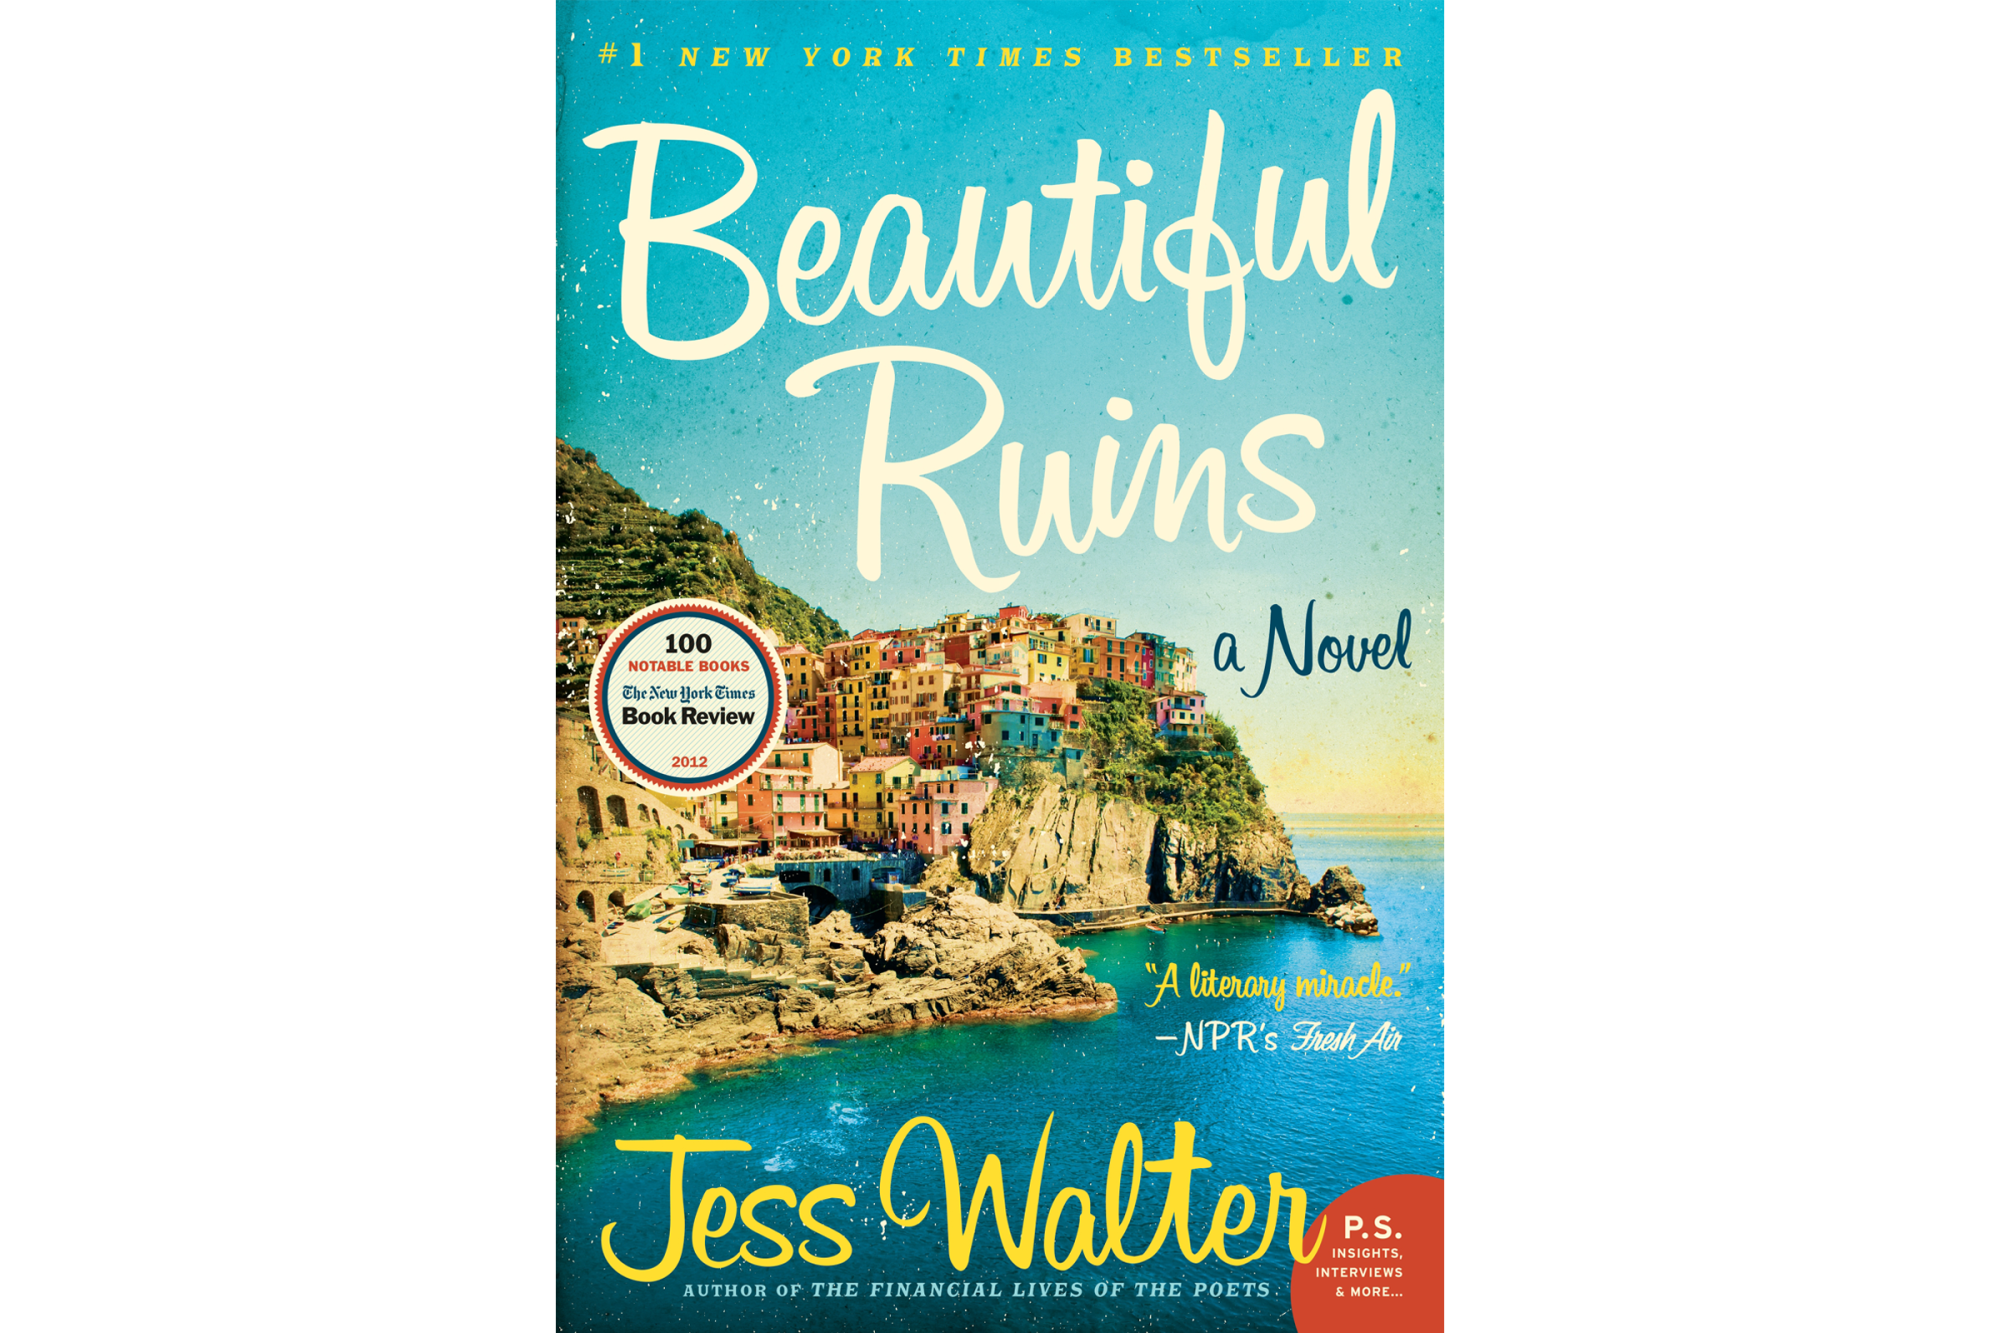 "Beautiful Ruins: A Novel" by Jess Walter